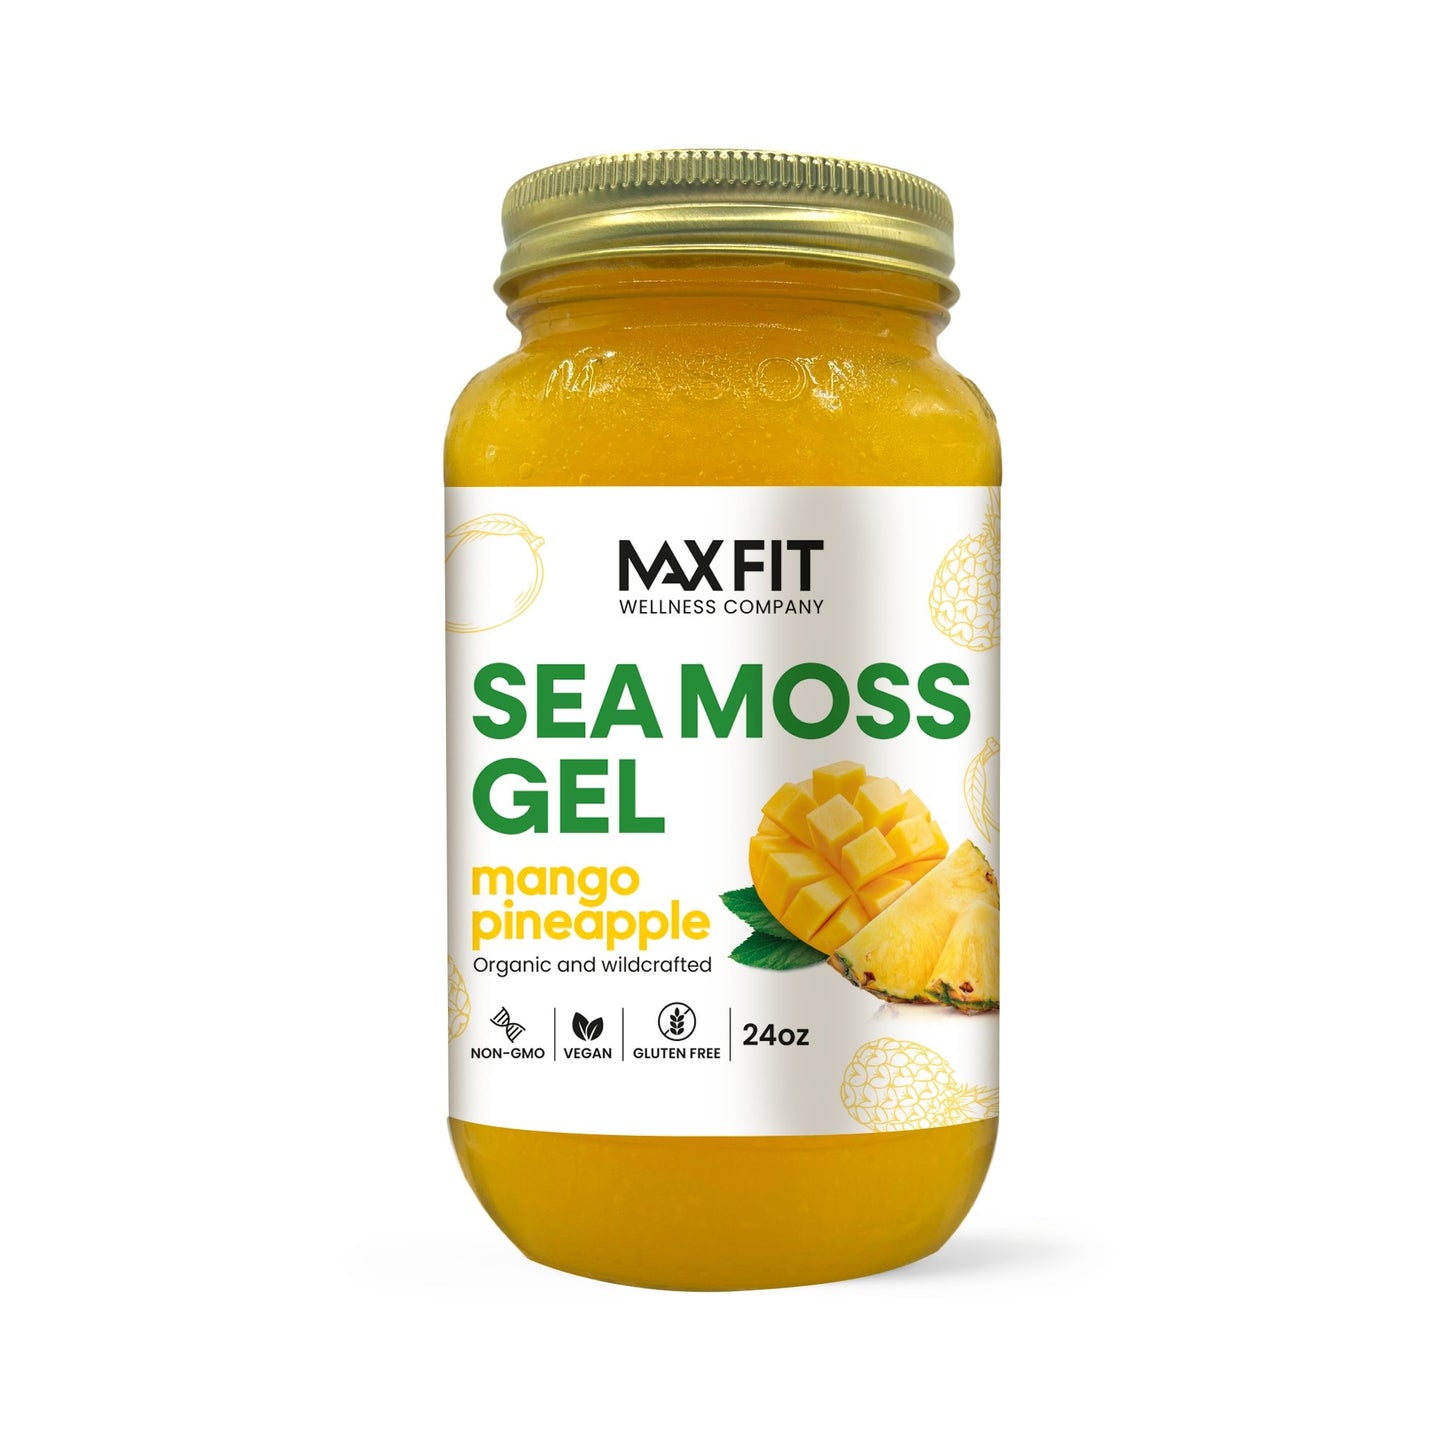 Best Sellers Bundle: 10 Bottles of 24 oz Sea Moss Gel - 1800SEAMOSS.com